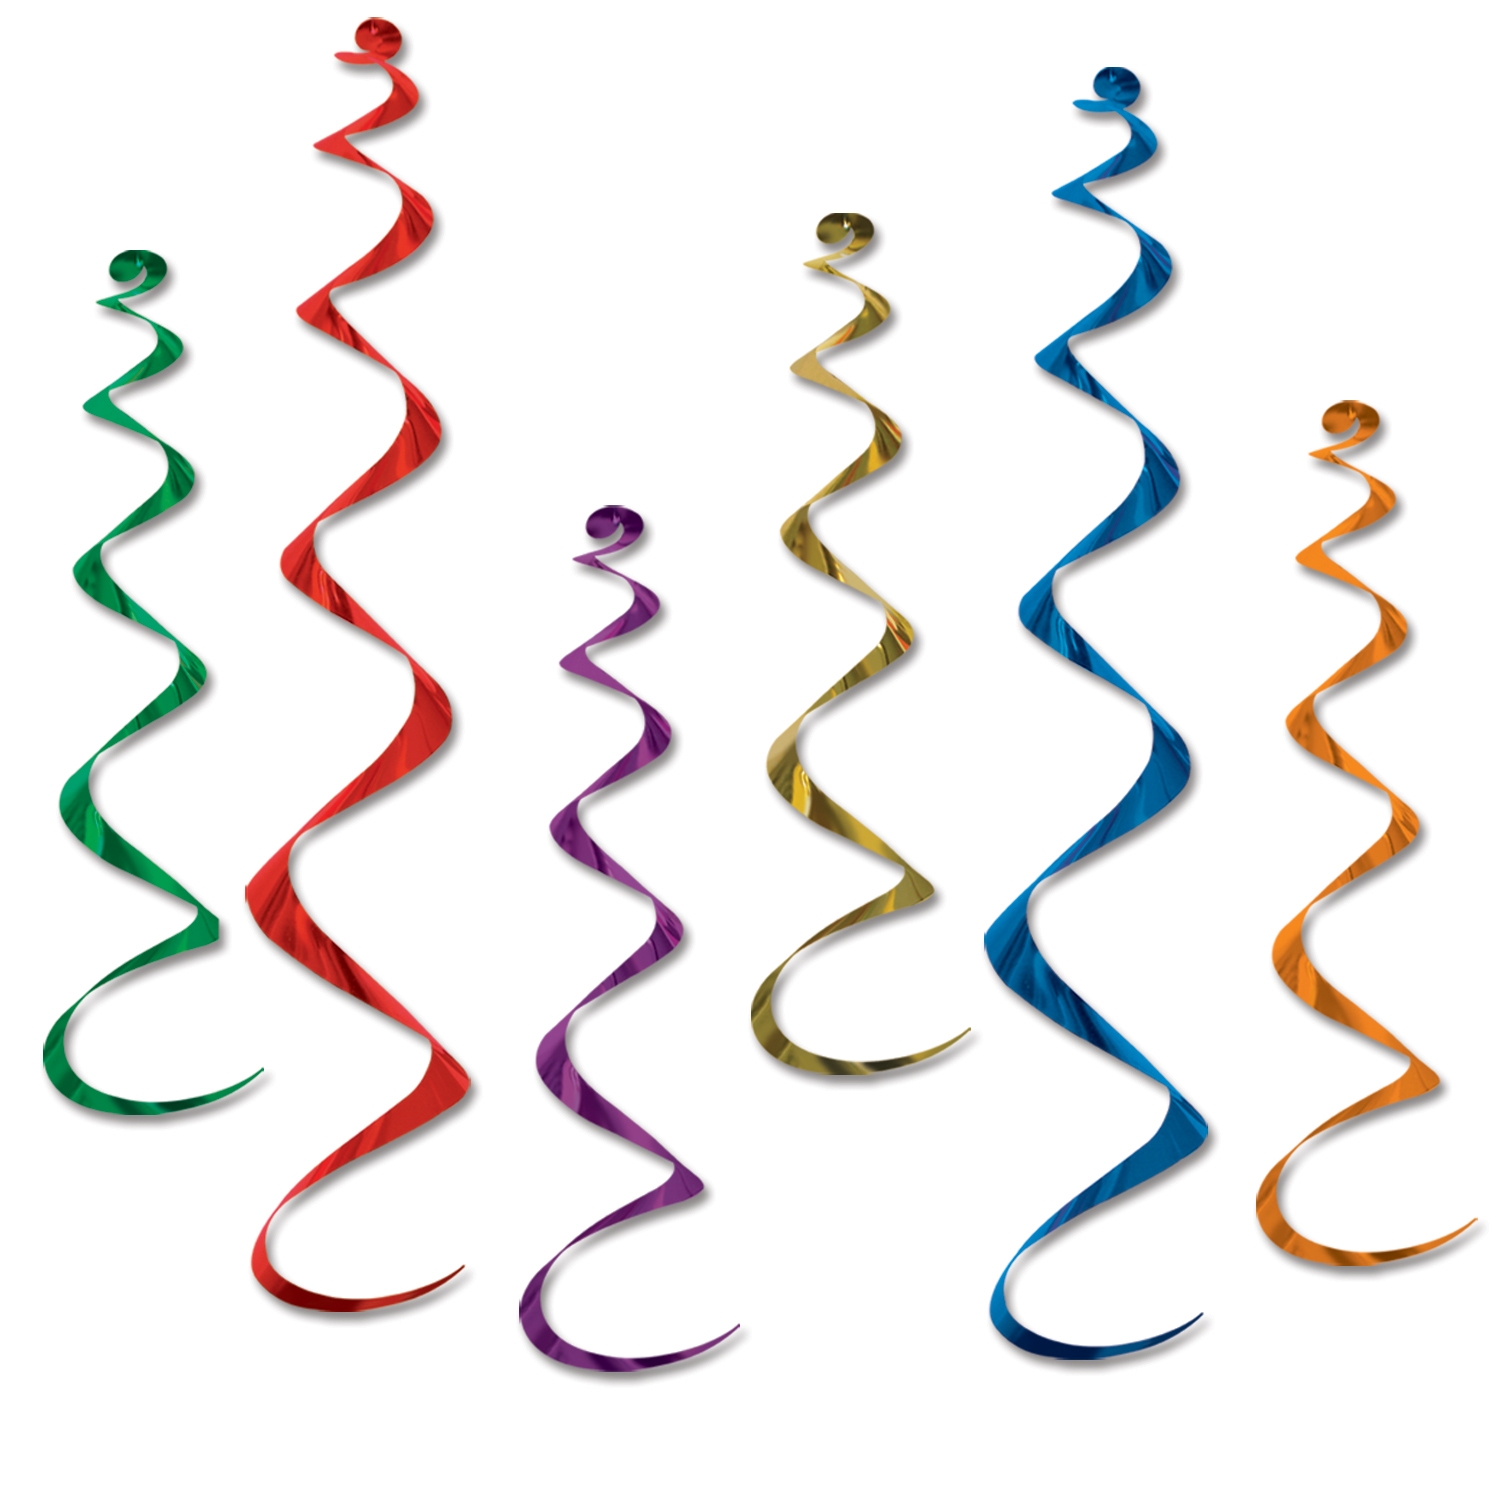 Metallic whirls in green, red, purple, yellow, blue, and orange.